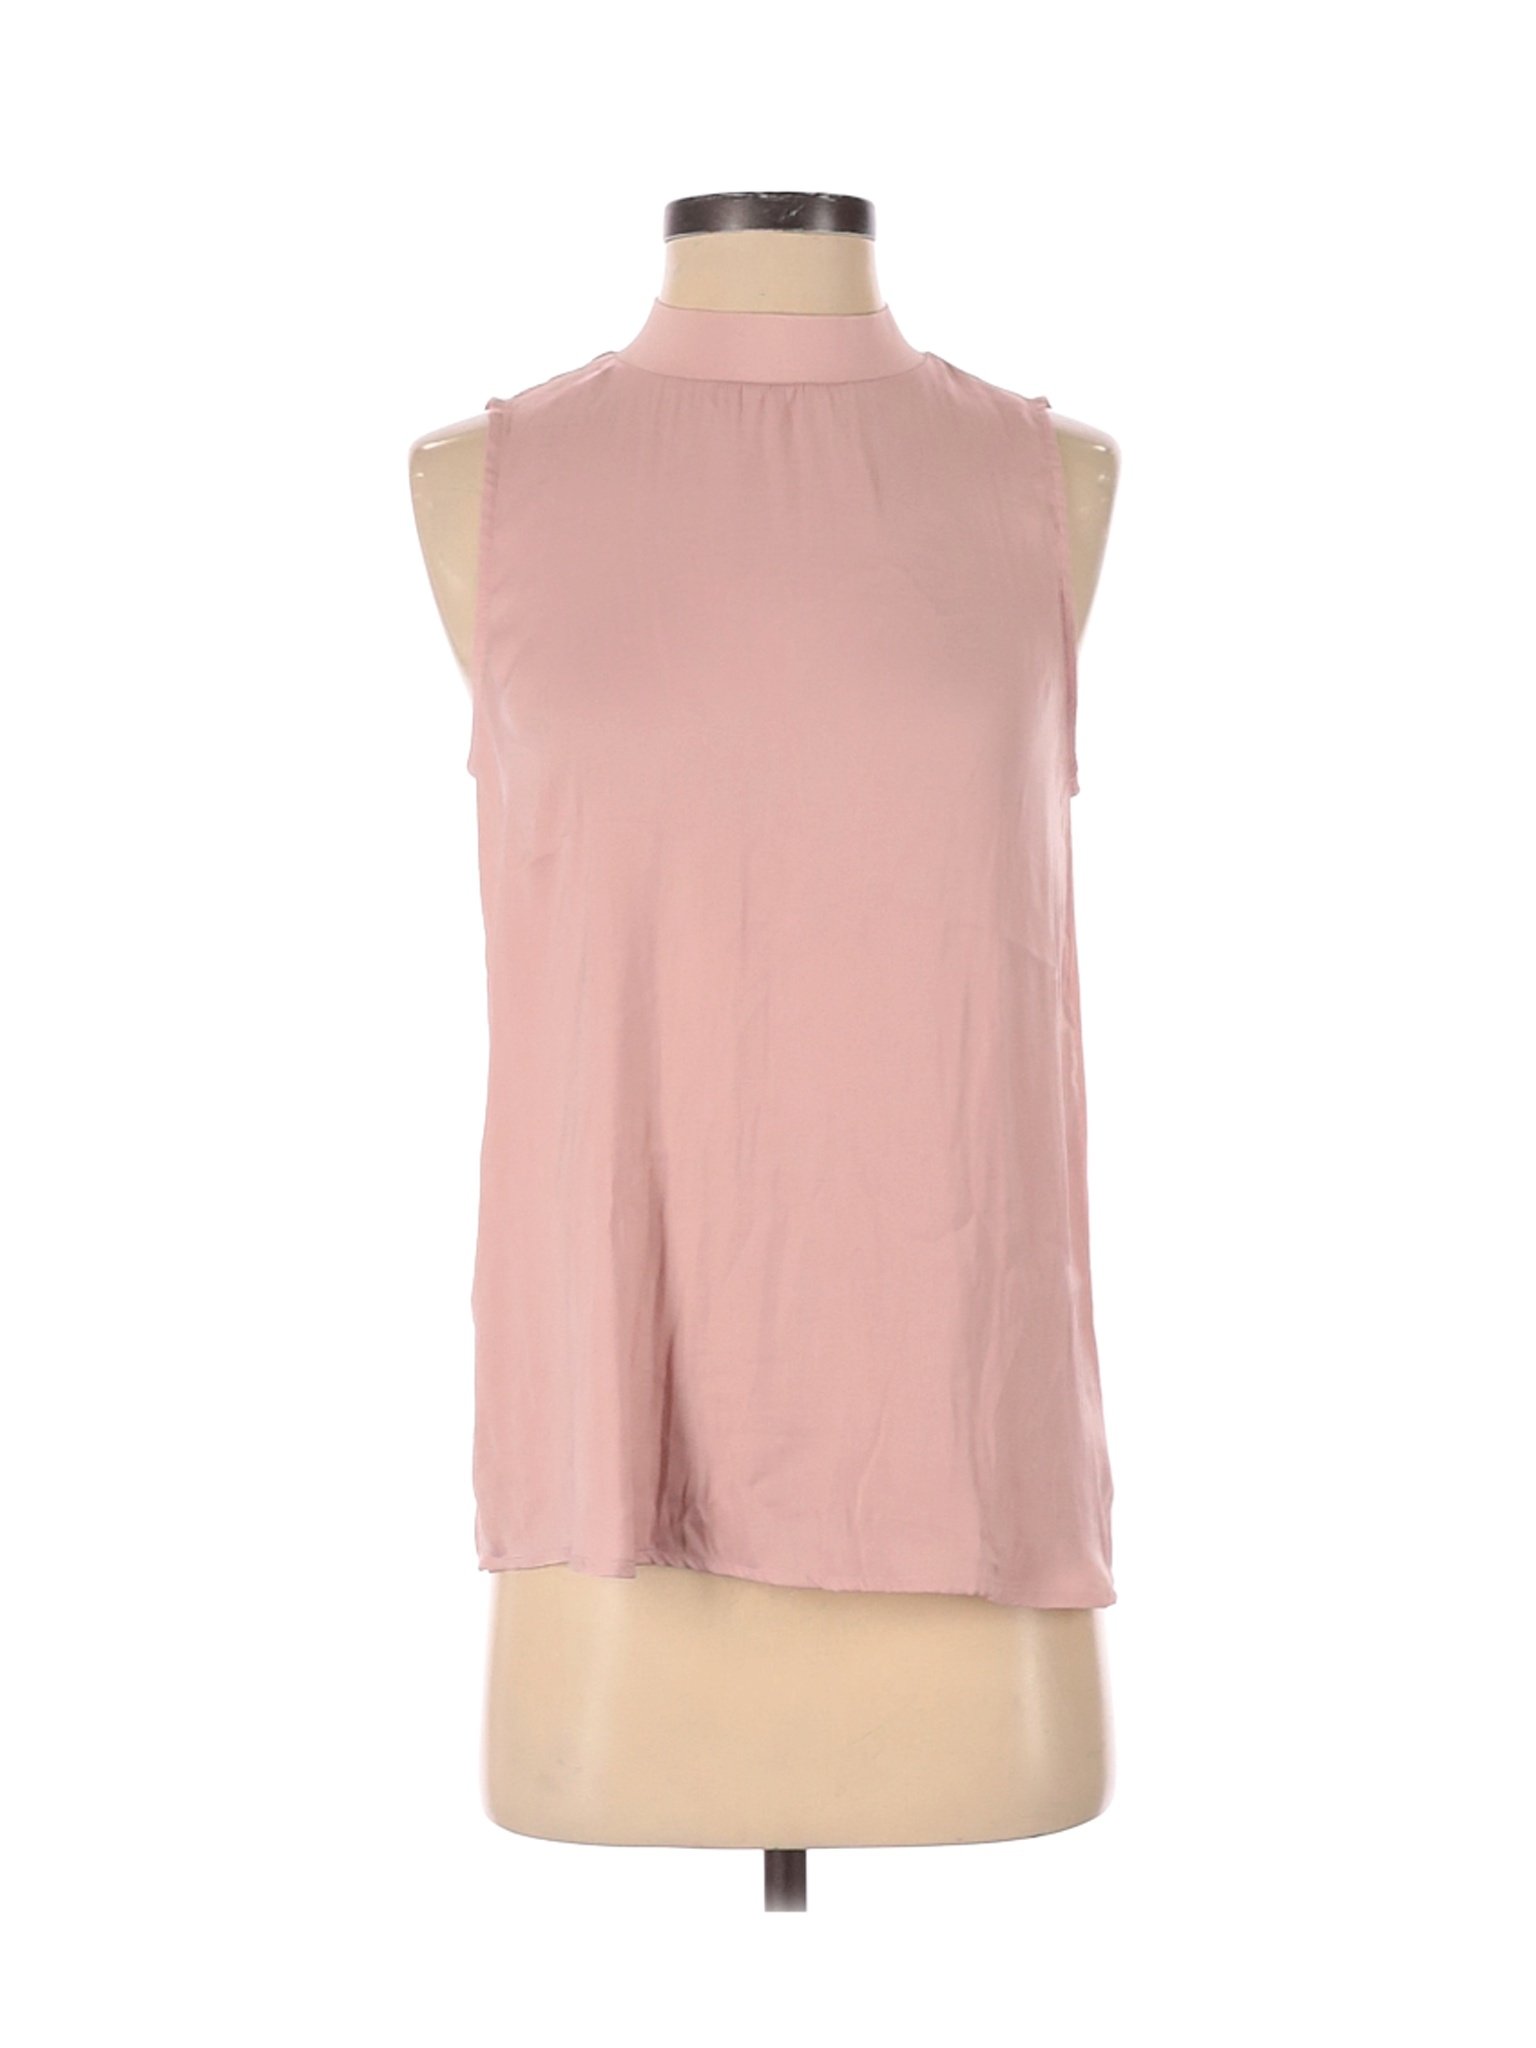 A New Day Women Pink Sleeveless Blouse S | eBay